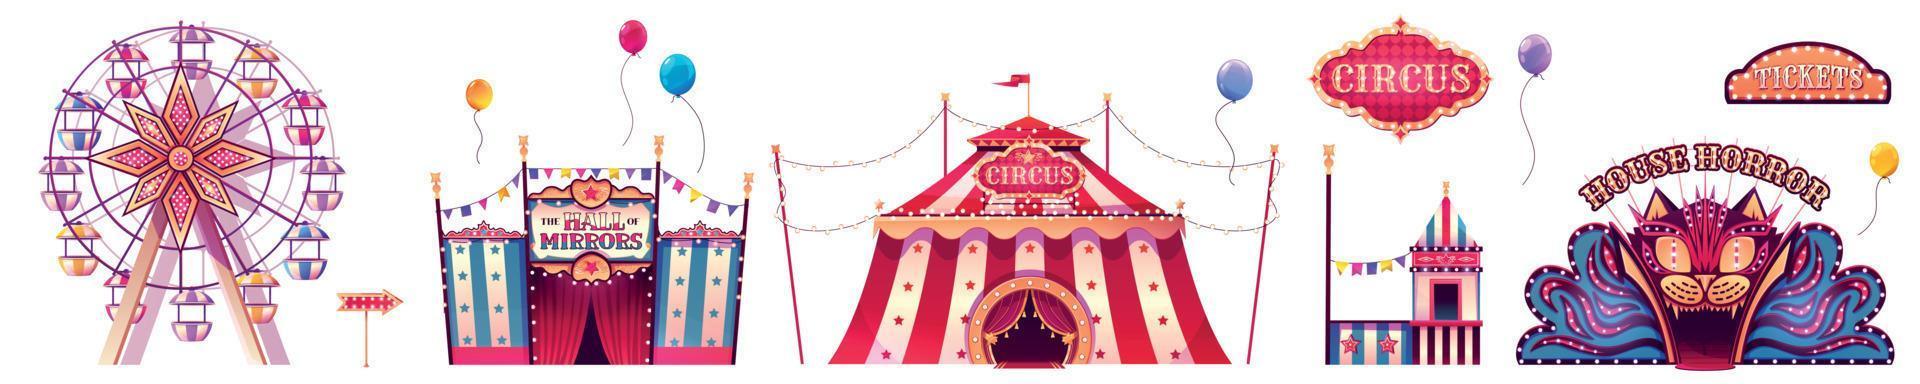 Amusement park with circus tent, ferris wheel vector